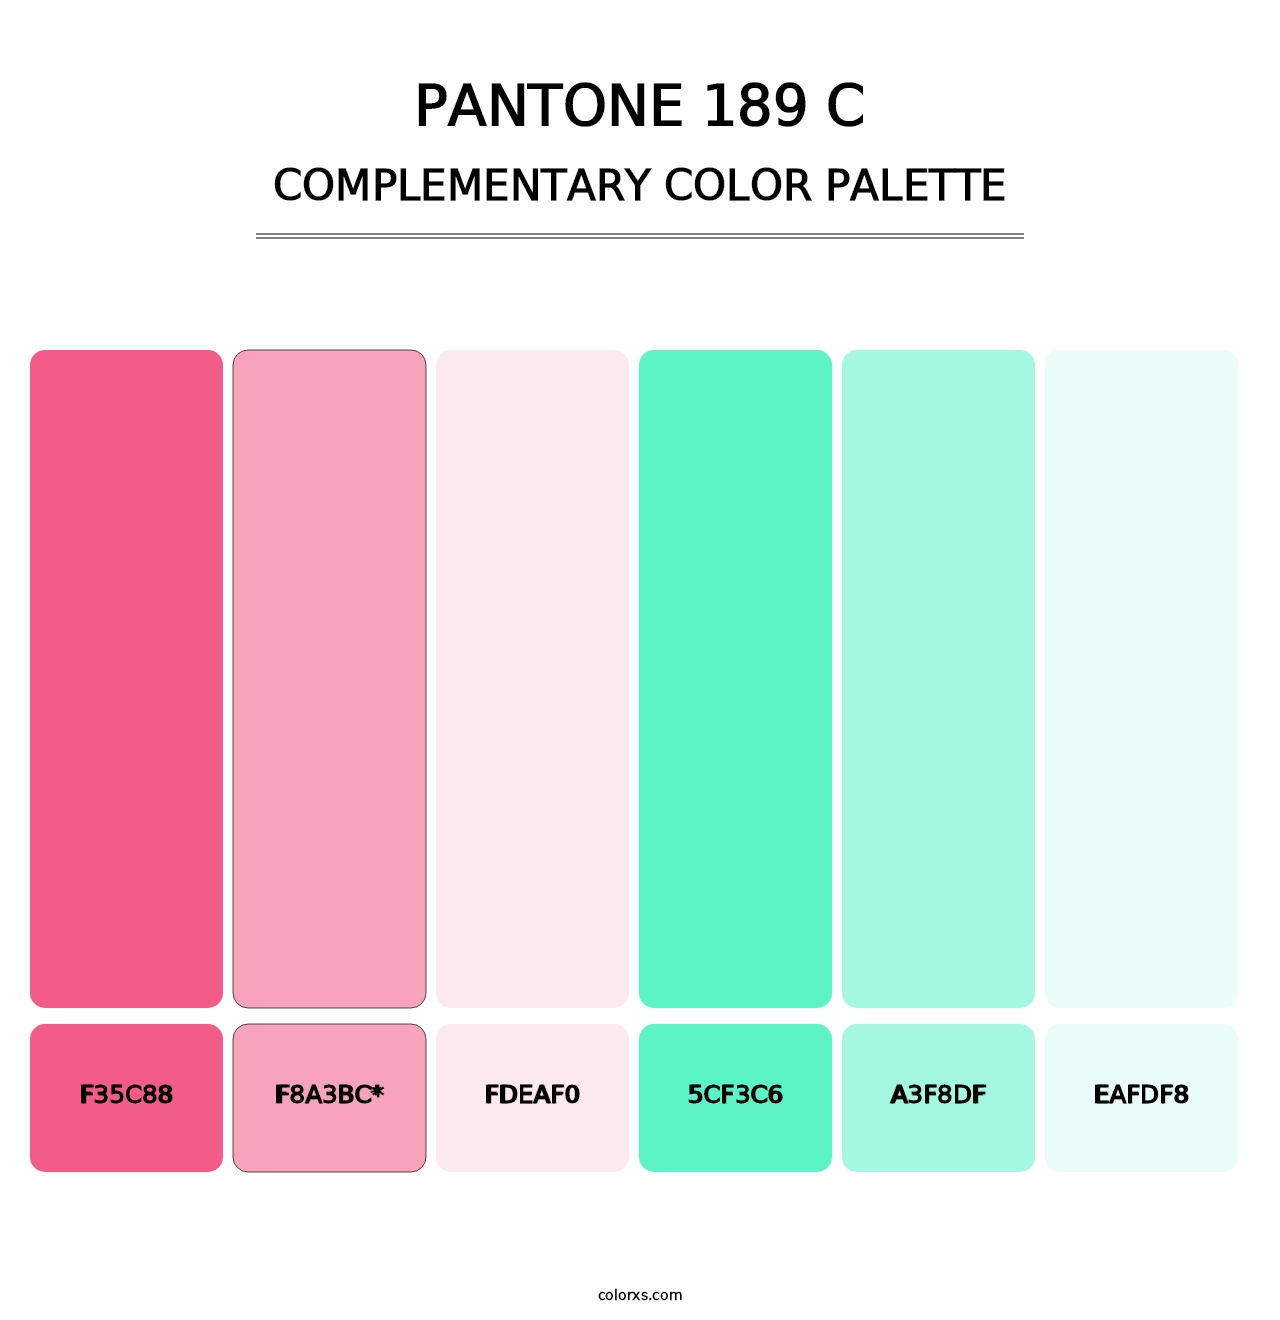 PANTONE 189 C - Complementary Color Palette